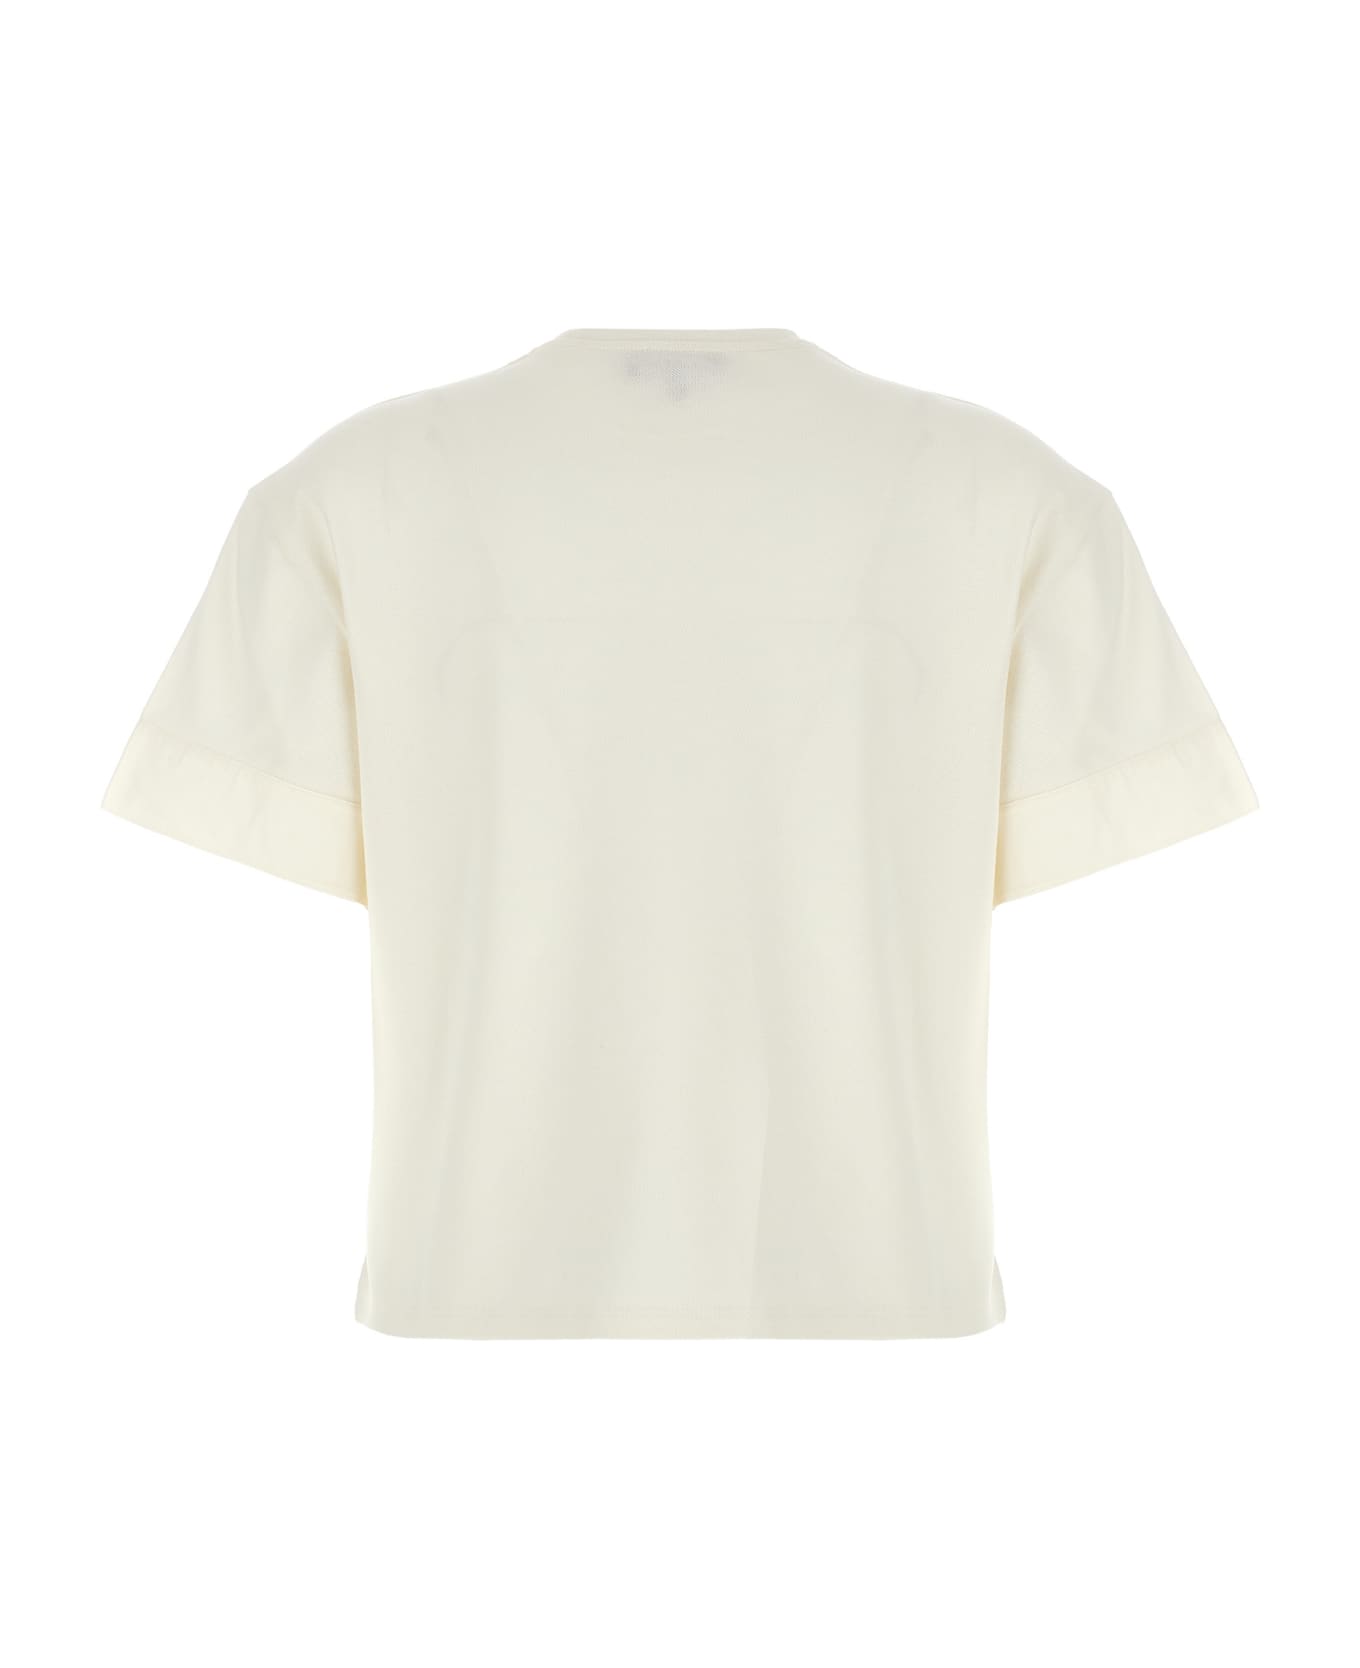 Theory Piqué Cotton Top - White Tシャツ